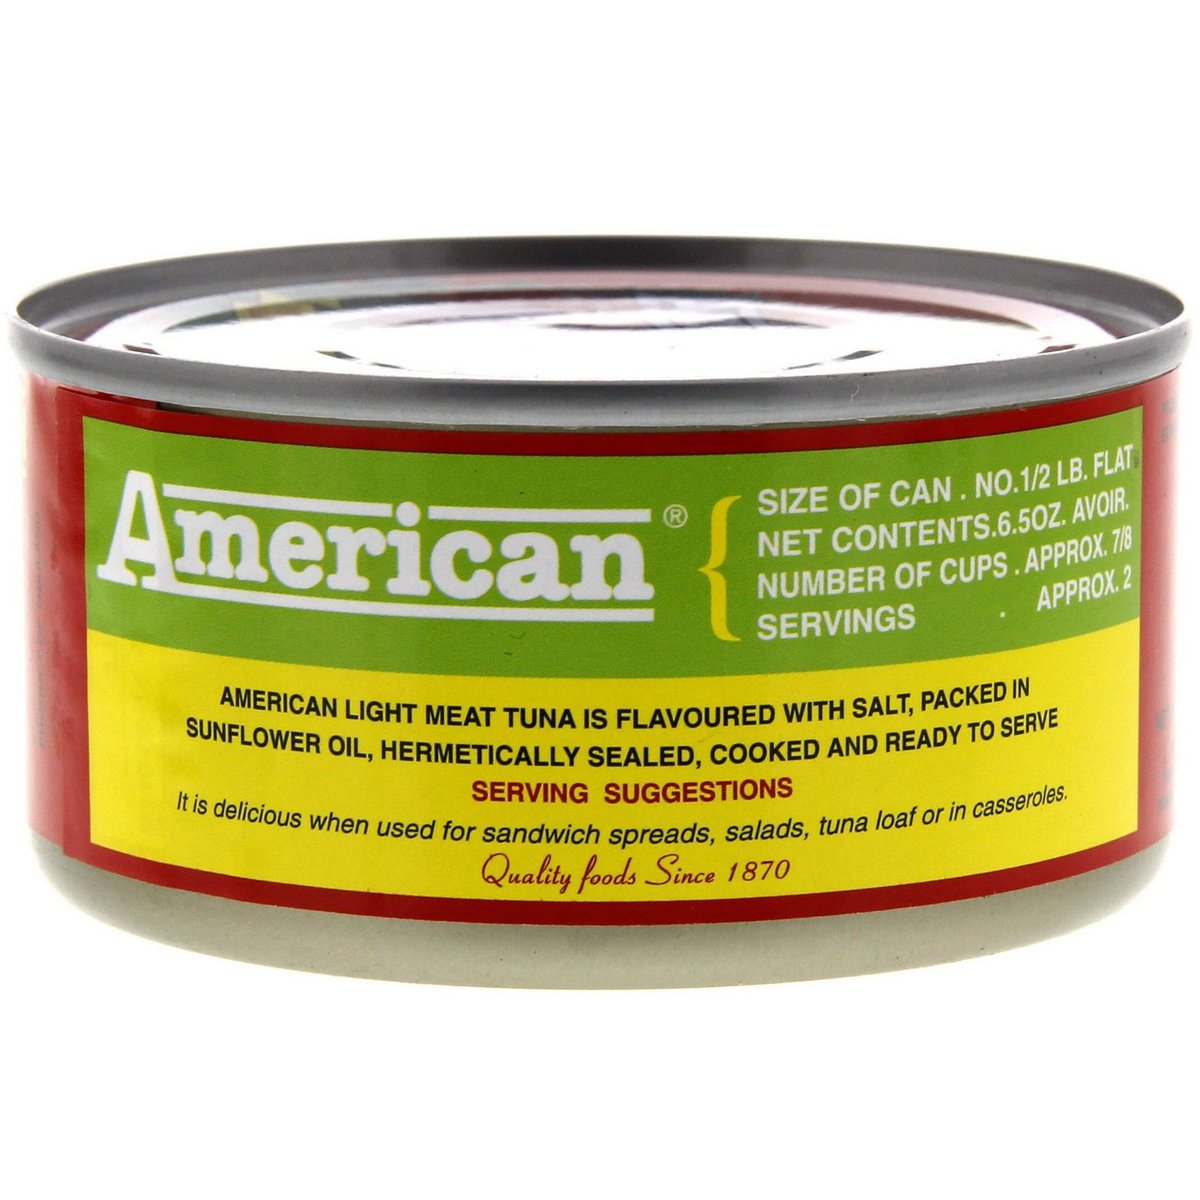 American Light Meat Tuna 185 g